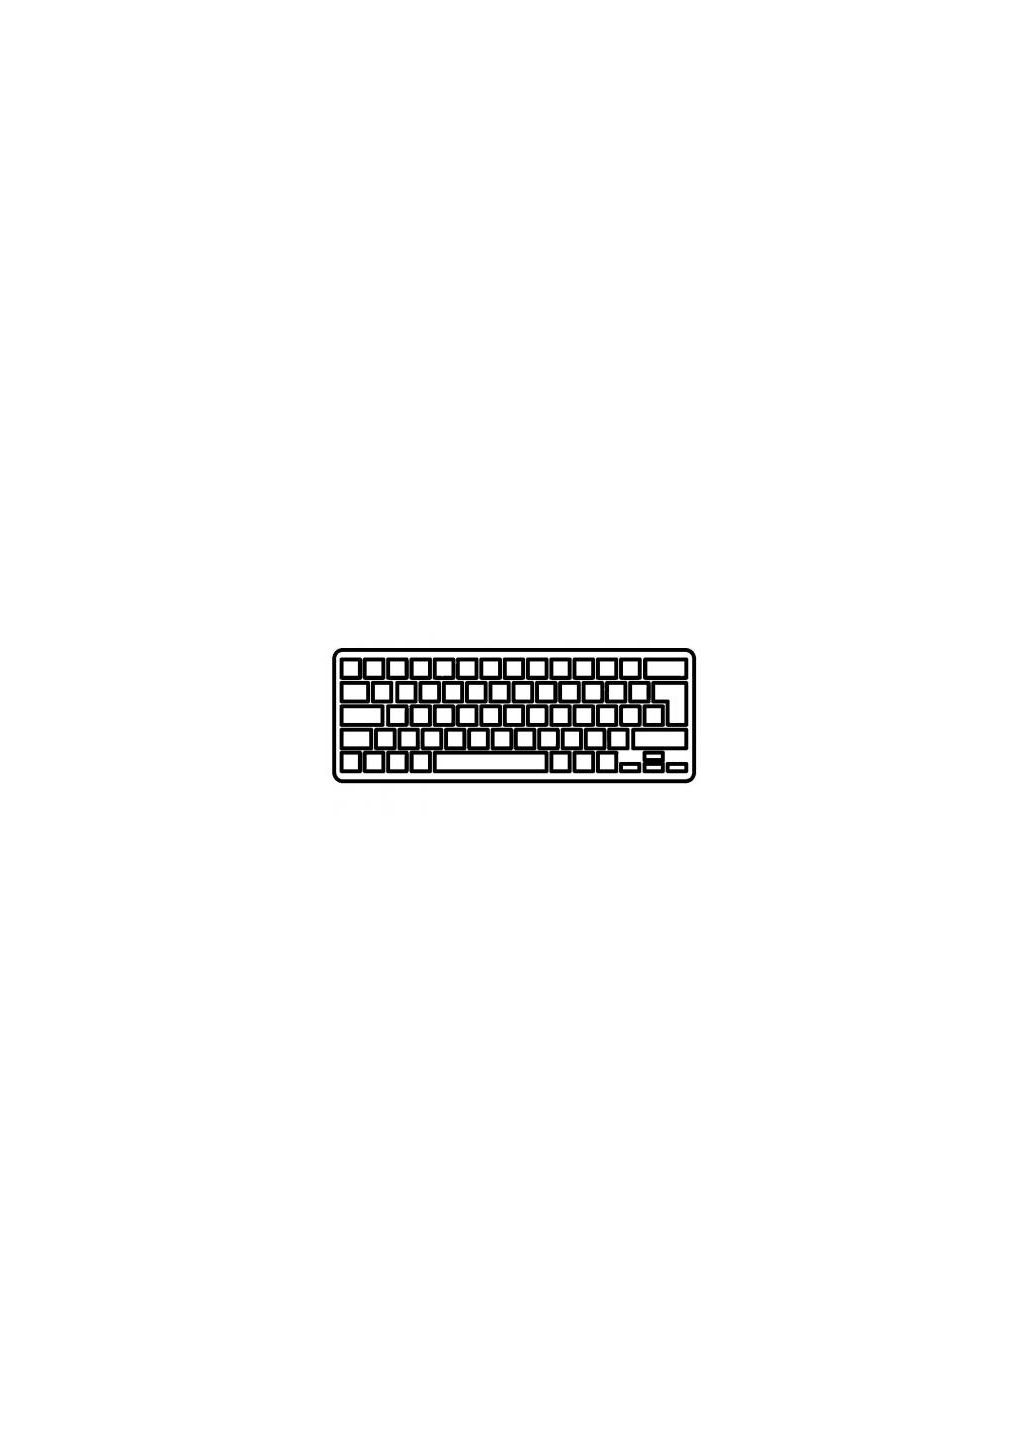 Клавиатура ноутбука Pavilion SleekBook 15BS/15-BW черн. без рамки UA/RU/US HP pavilion sleekbook 15-bs/15-bw черн.без рамки ua/r (276707627)